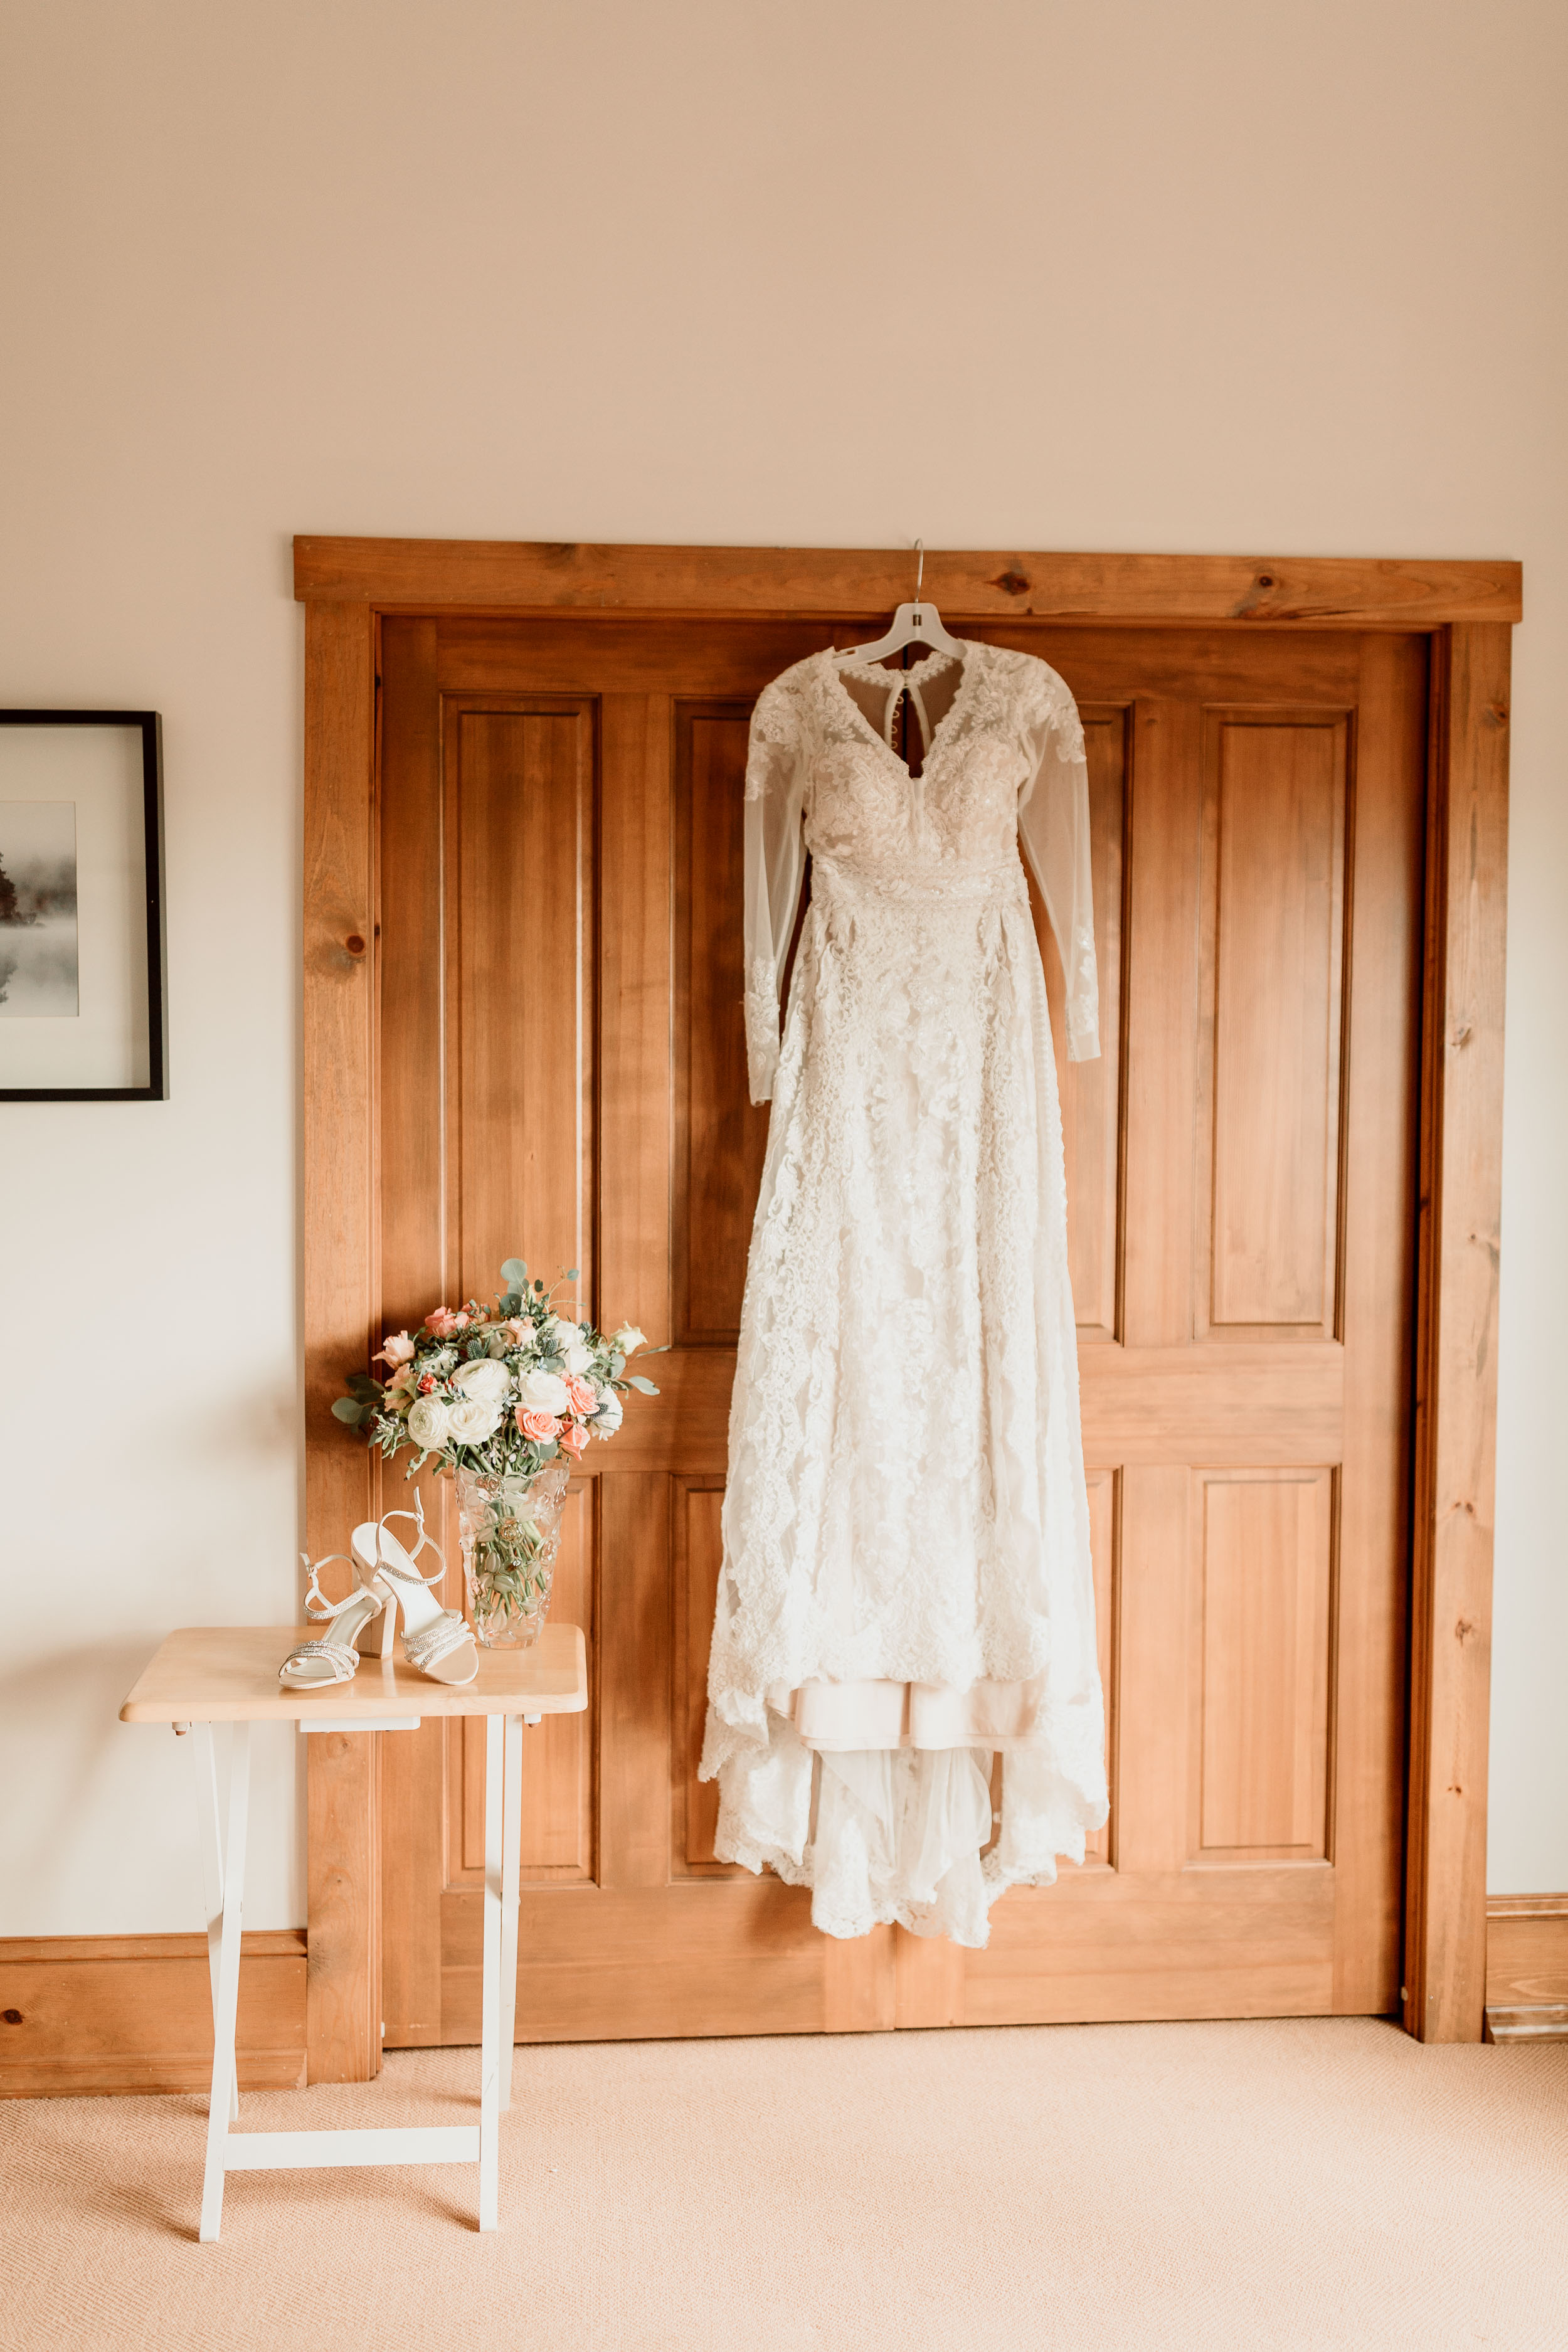 Wedding dress with sleeves detail getting ready photo | Galena Illinois Airbnb Wedding | Wedding Photographer | Eagle Ridge Galena Wedding | Outdoor Wedding Inspiration | Small Intimate Elopement Wedding